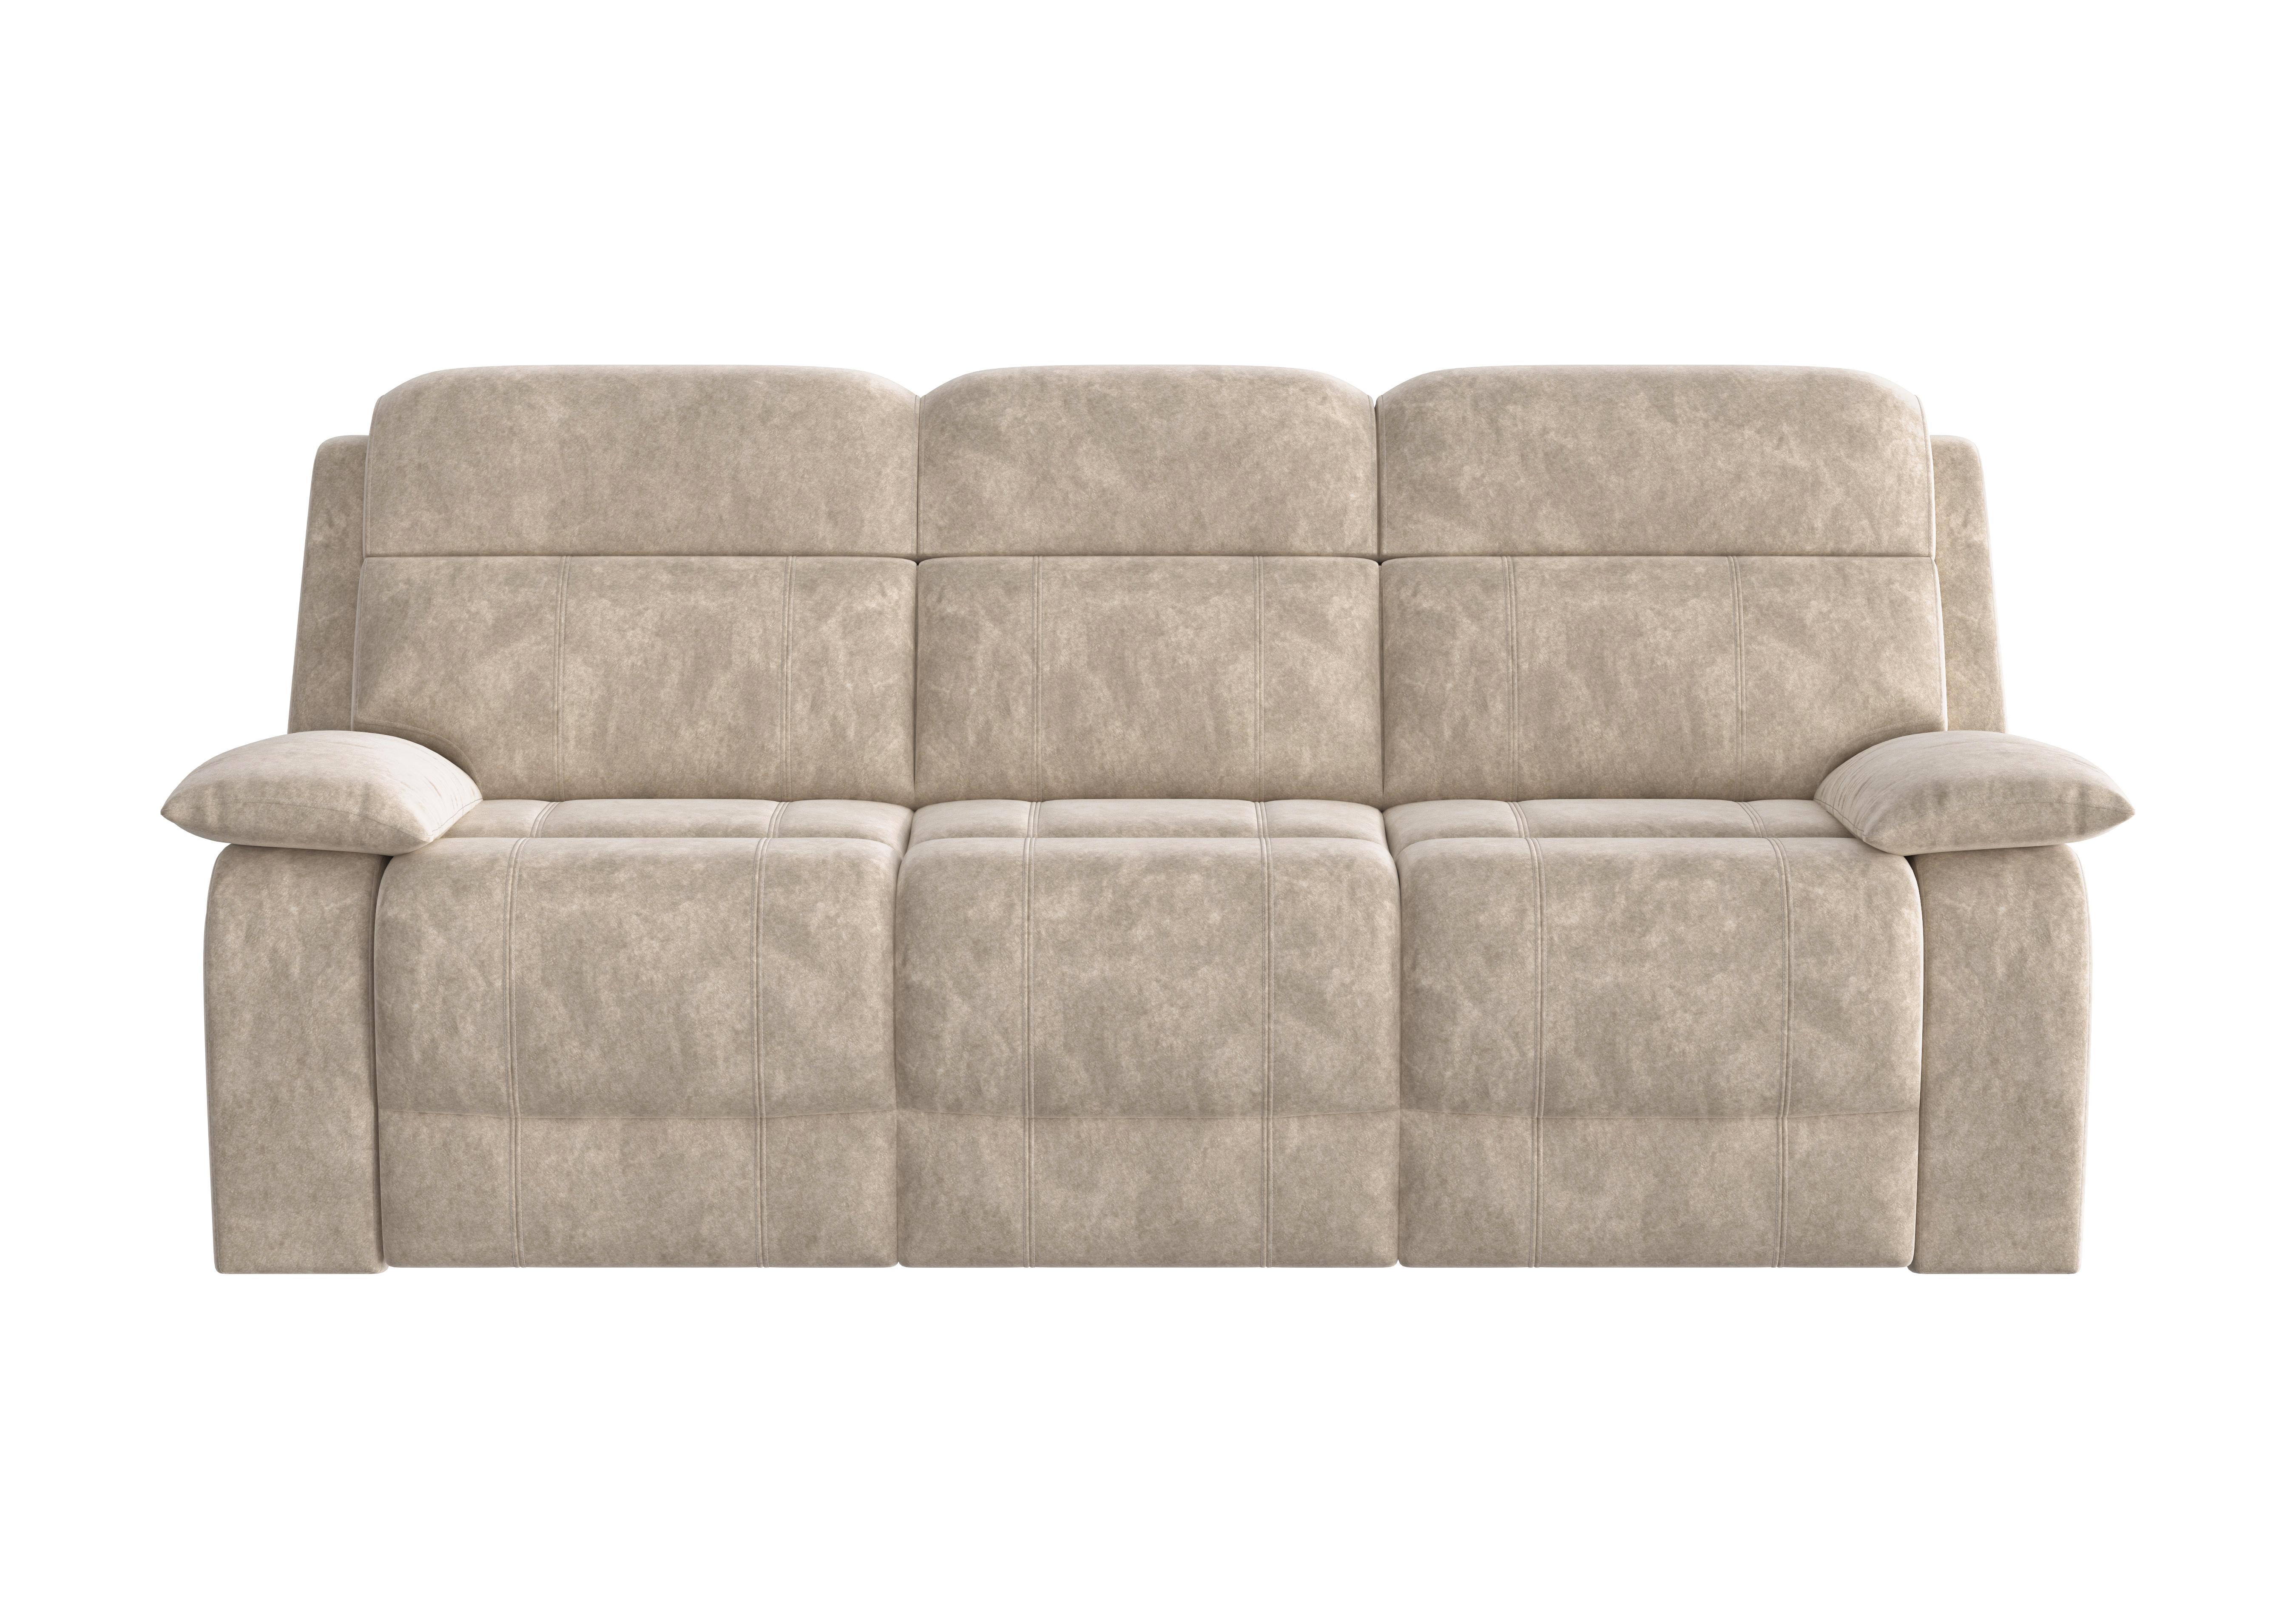 Moreno 3 Seater Fabric Sofa in Bfa-Bnn-R26 Cream on Furniture Village